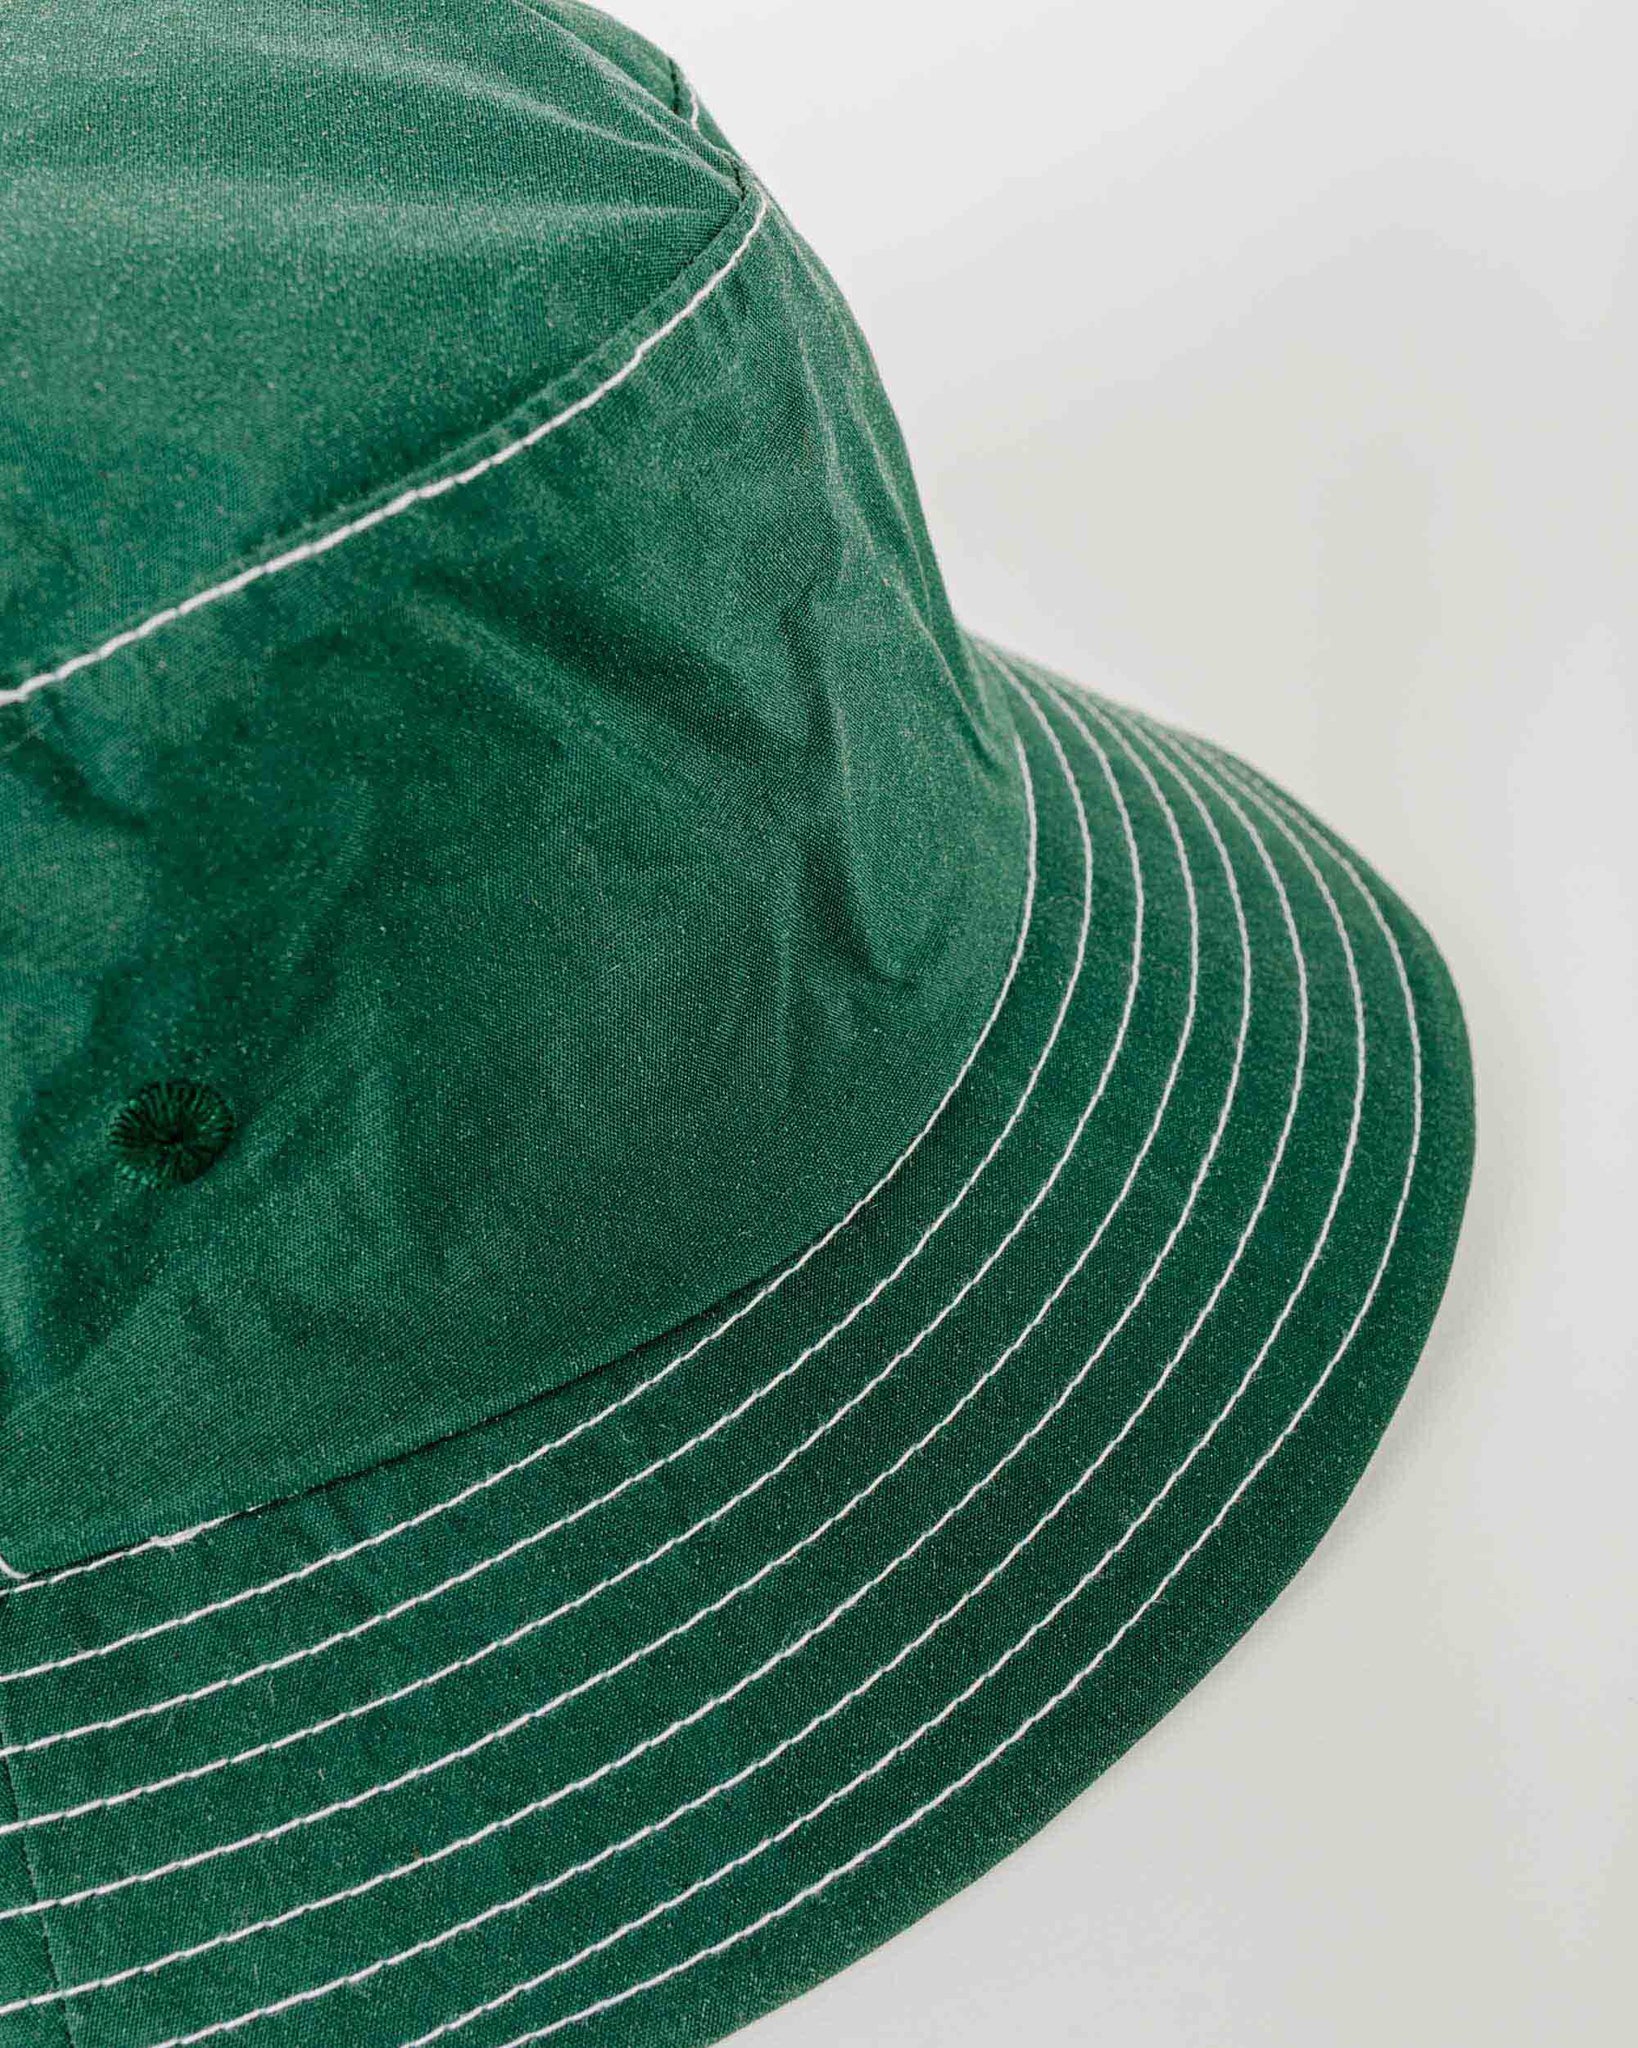 Lite Year Japanese Nylon Taffeta Bucket Hat Varsity Green Details